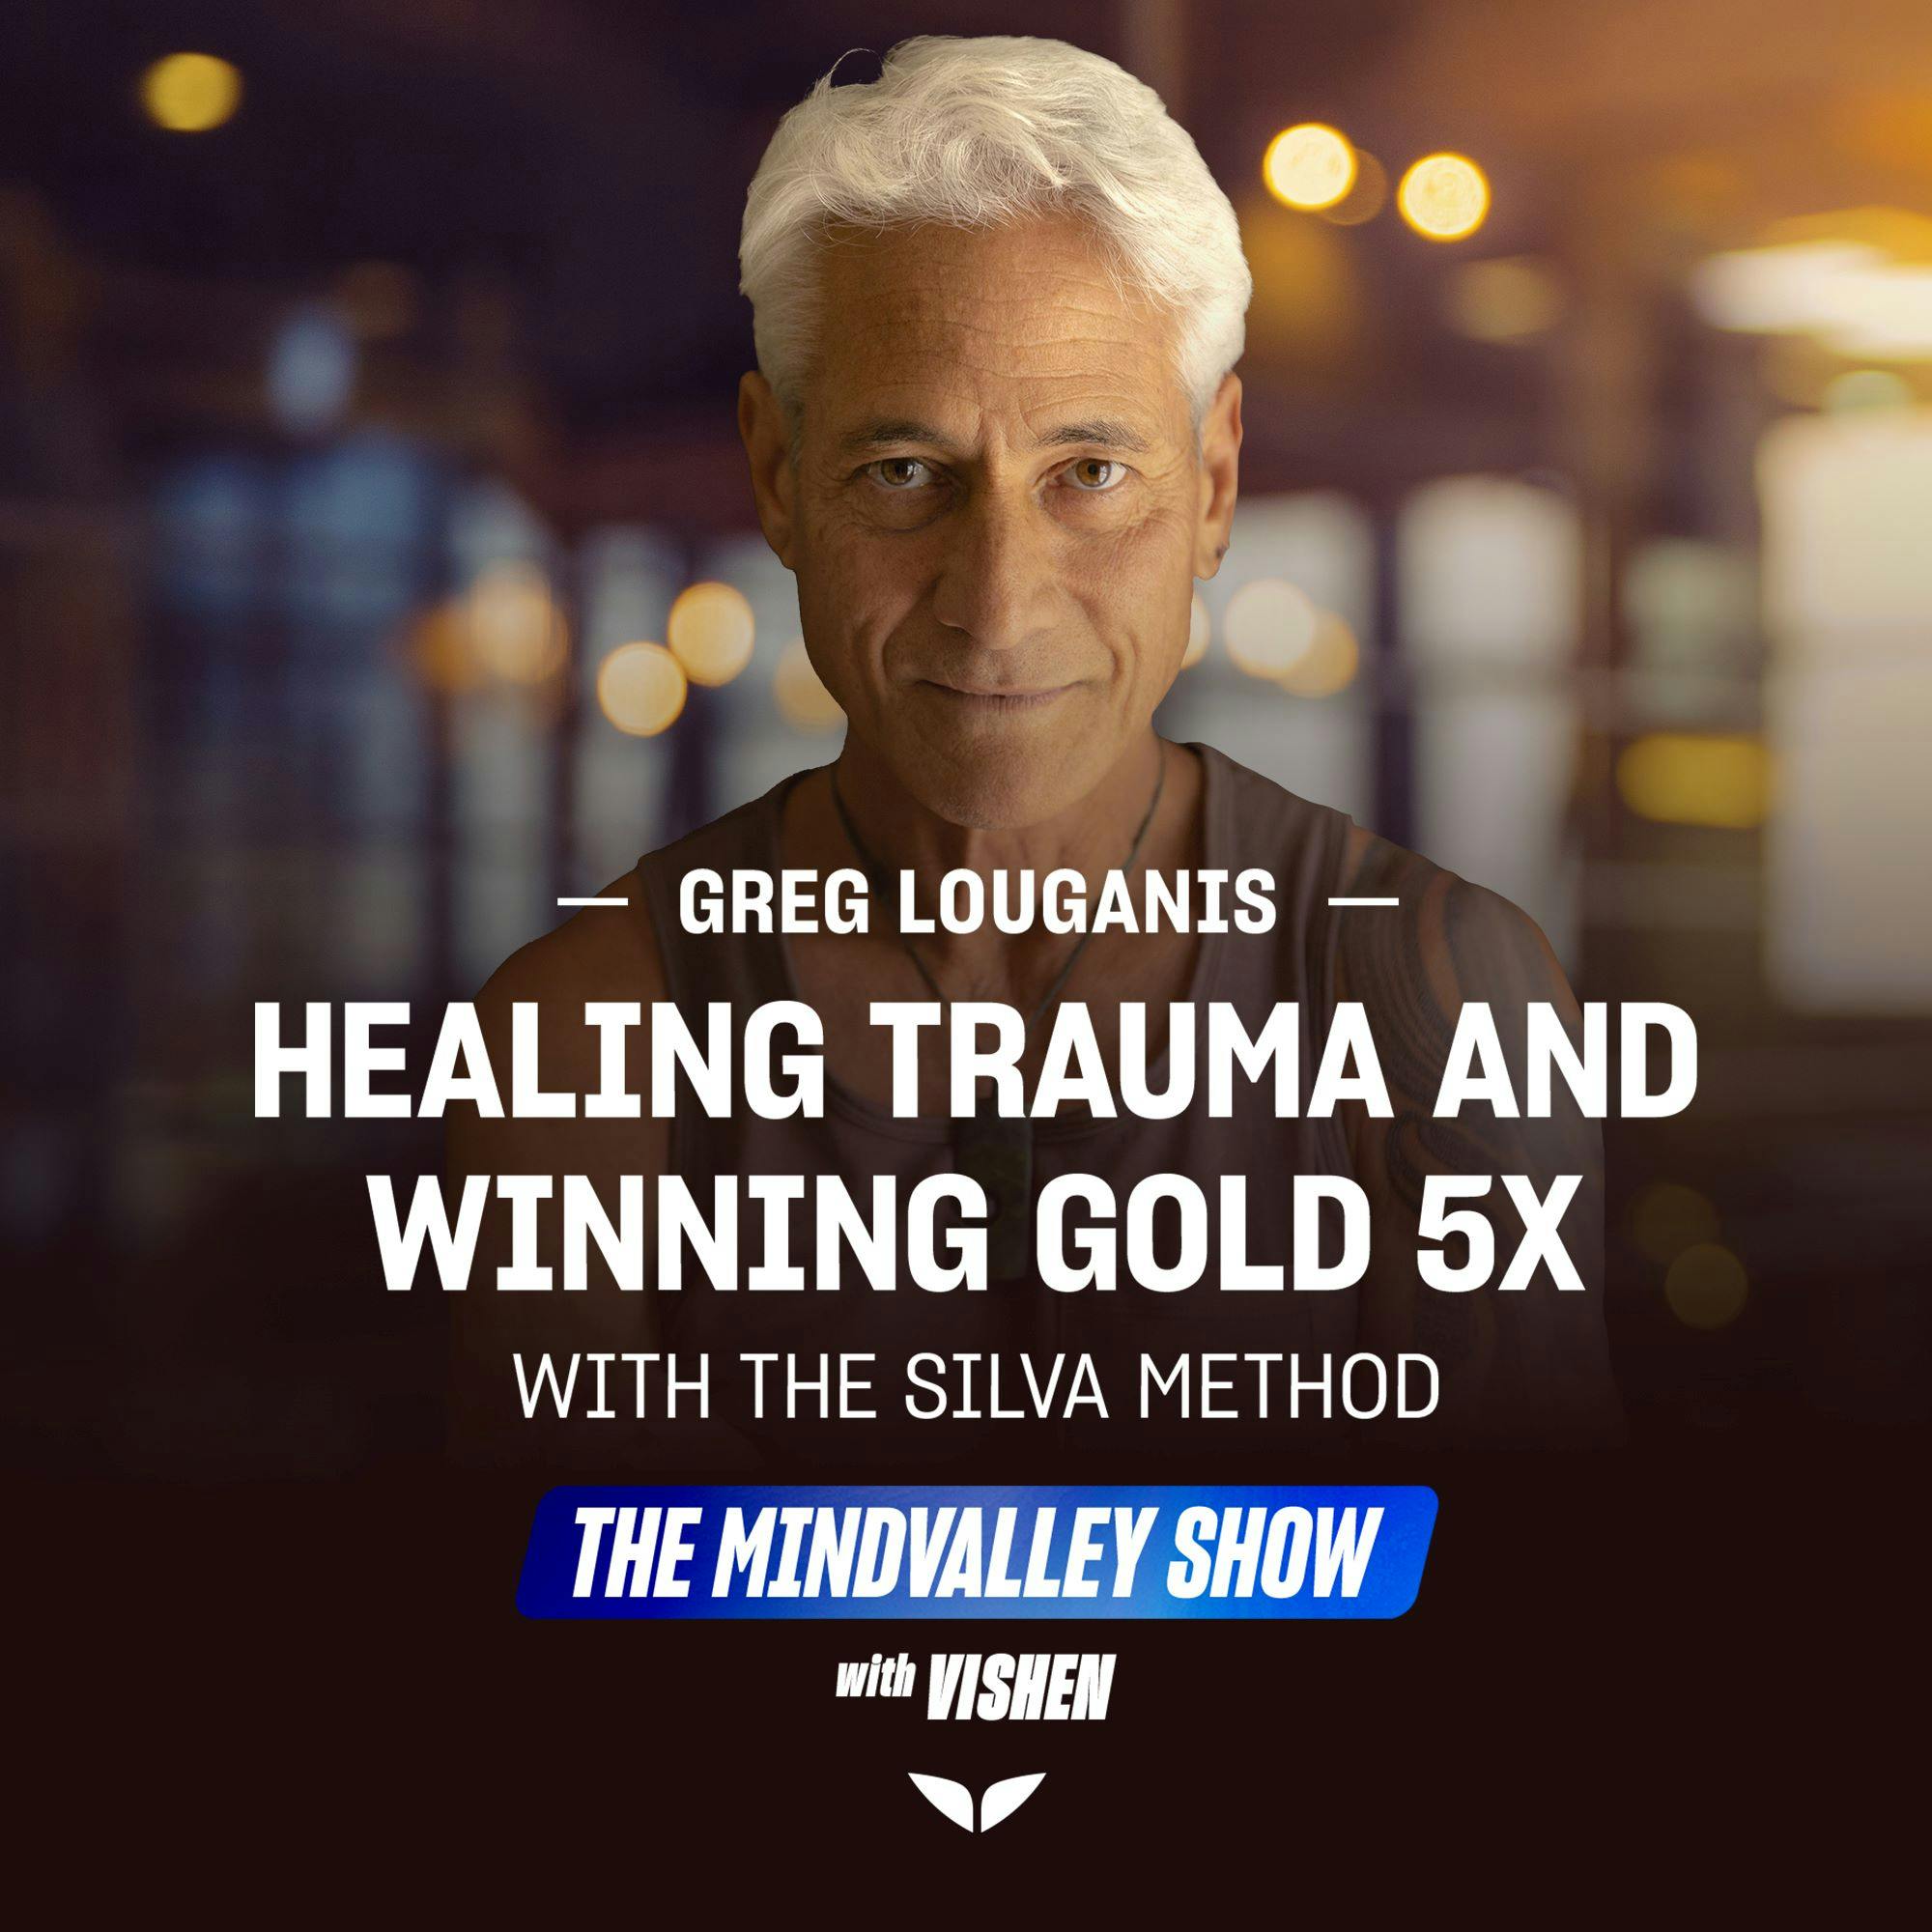 Legendary Olympian Greg Louganis On Healing His Trauma and Winning Gold 5x With The Silva Method